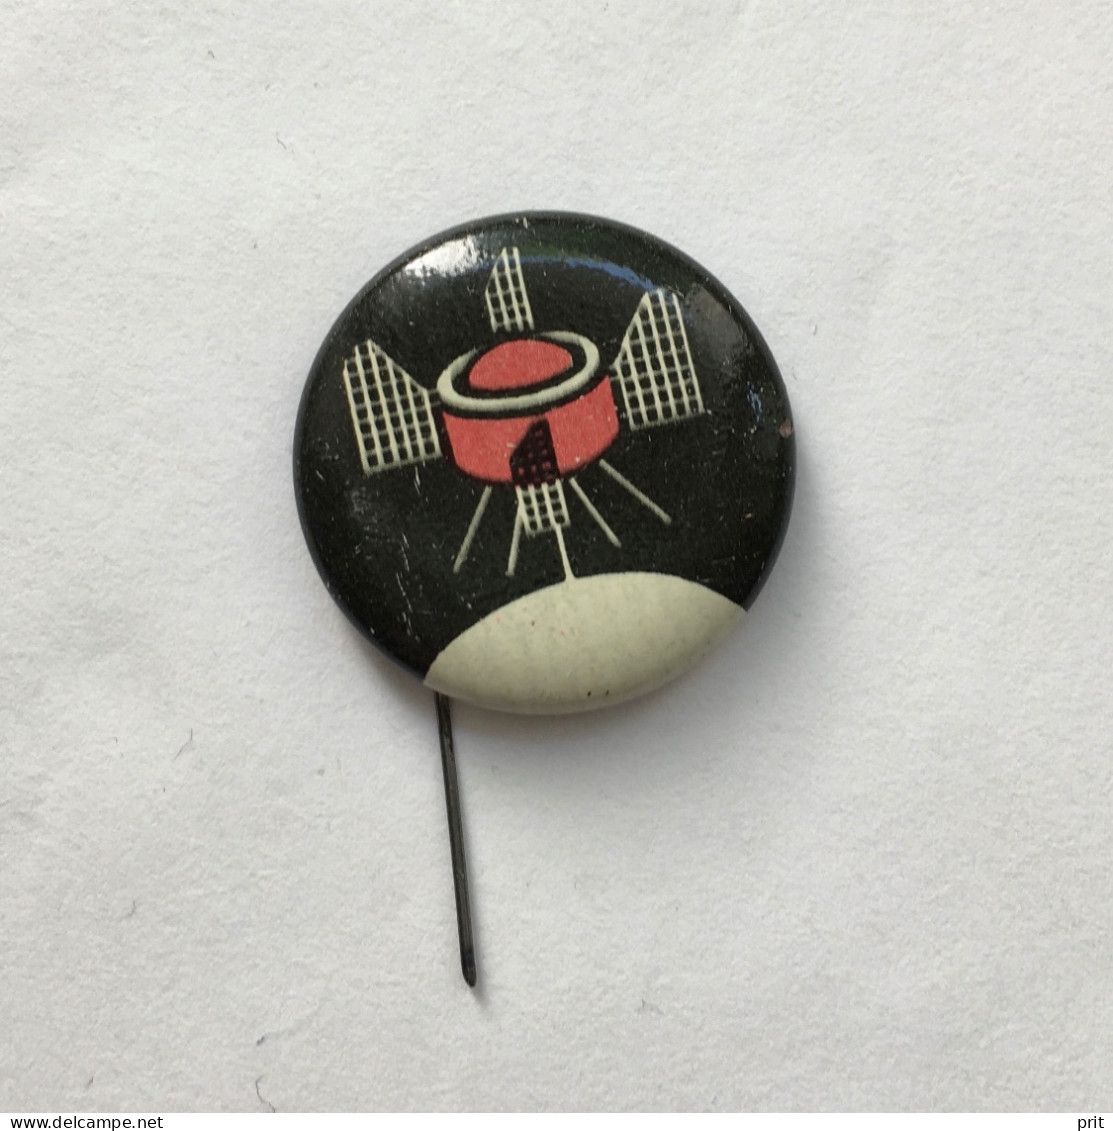 Sputnik Space Cosmos Spaceship Programe Soviet Russia USSR 1960s Vintage Pin Badge Metal - Espace